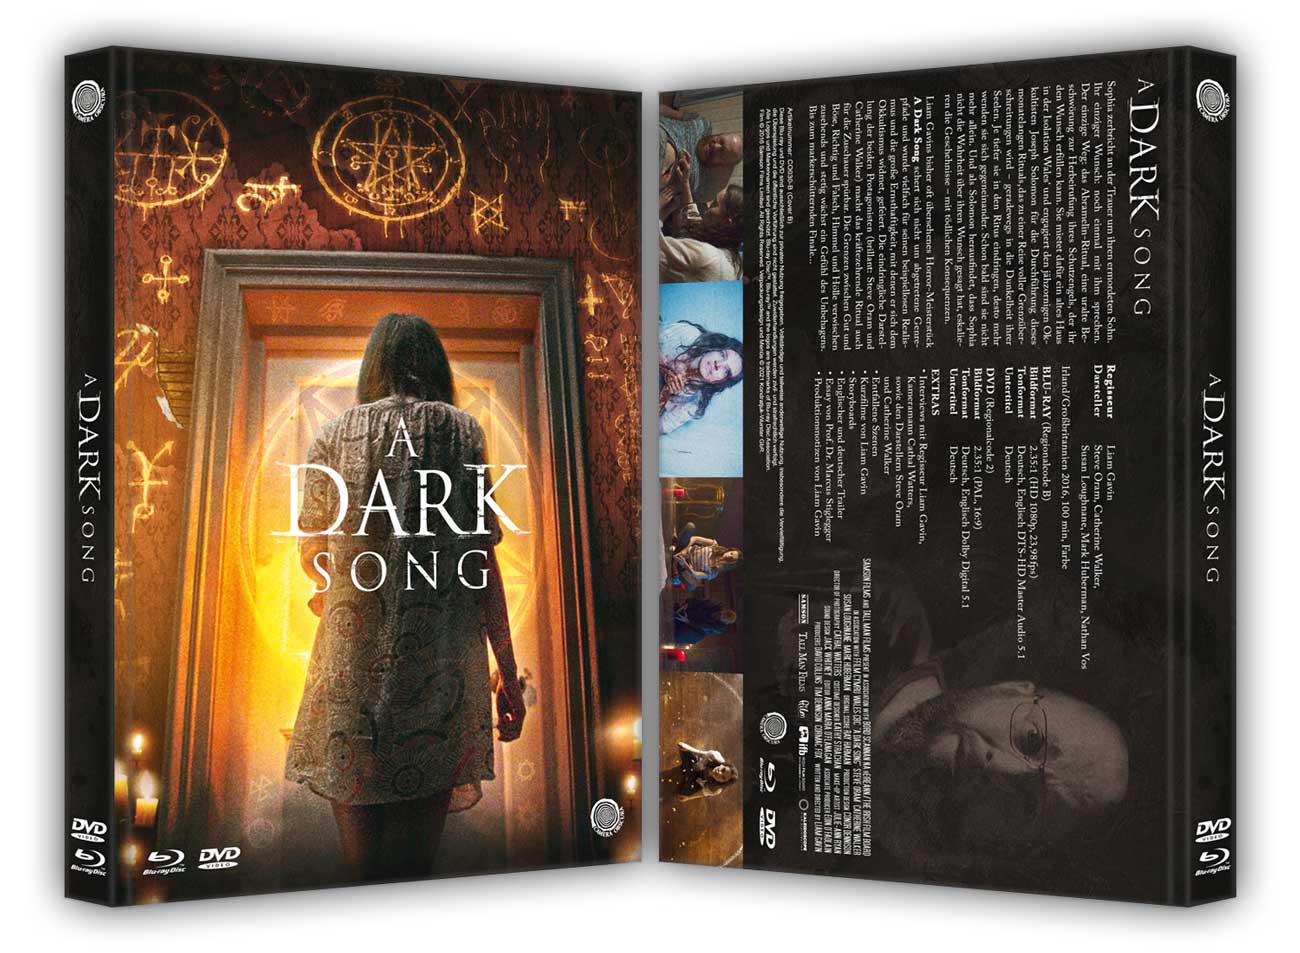 A-Dark-Song-Mediabook-Cover-b_3d_1024x1024@2x.jpg